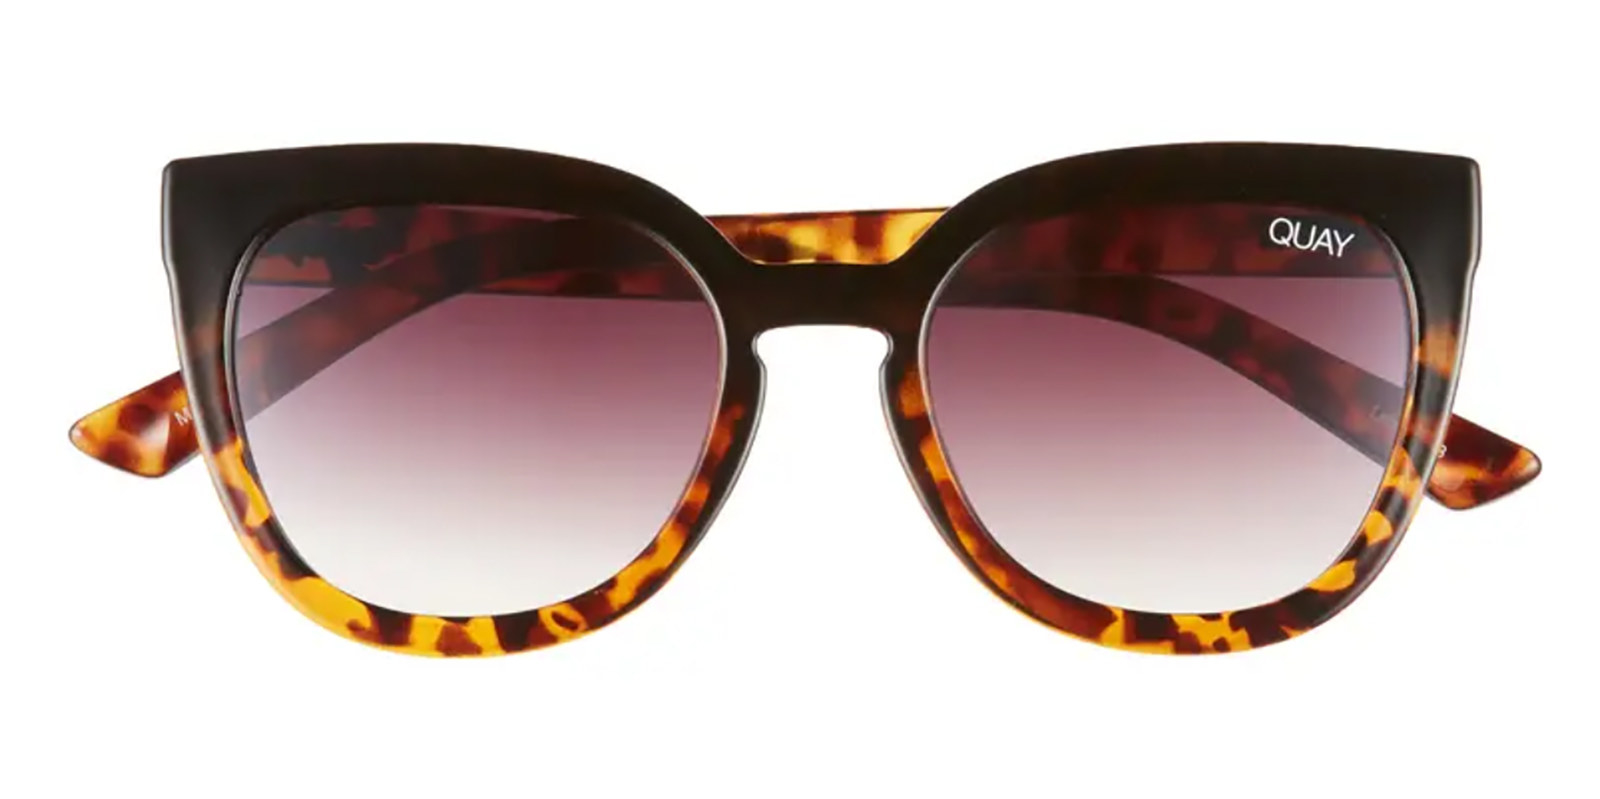 An image of Quay Noosa Cat Eye sunglasses